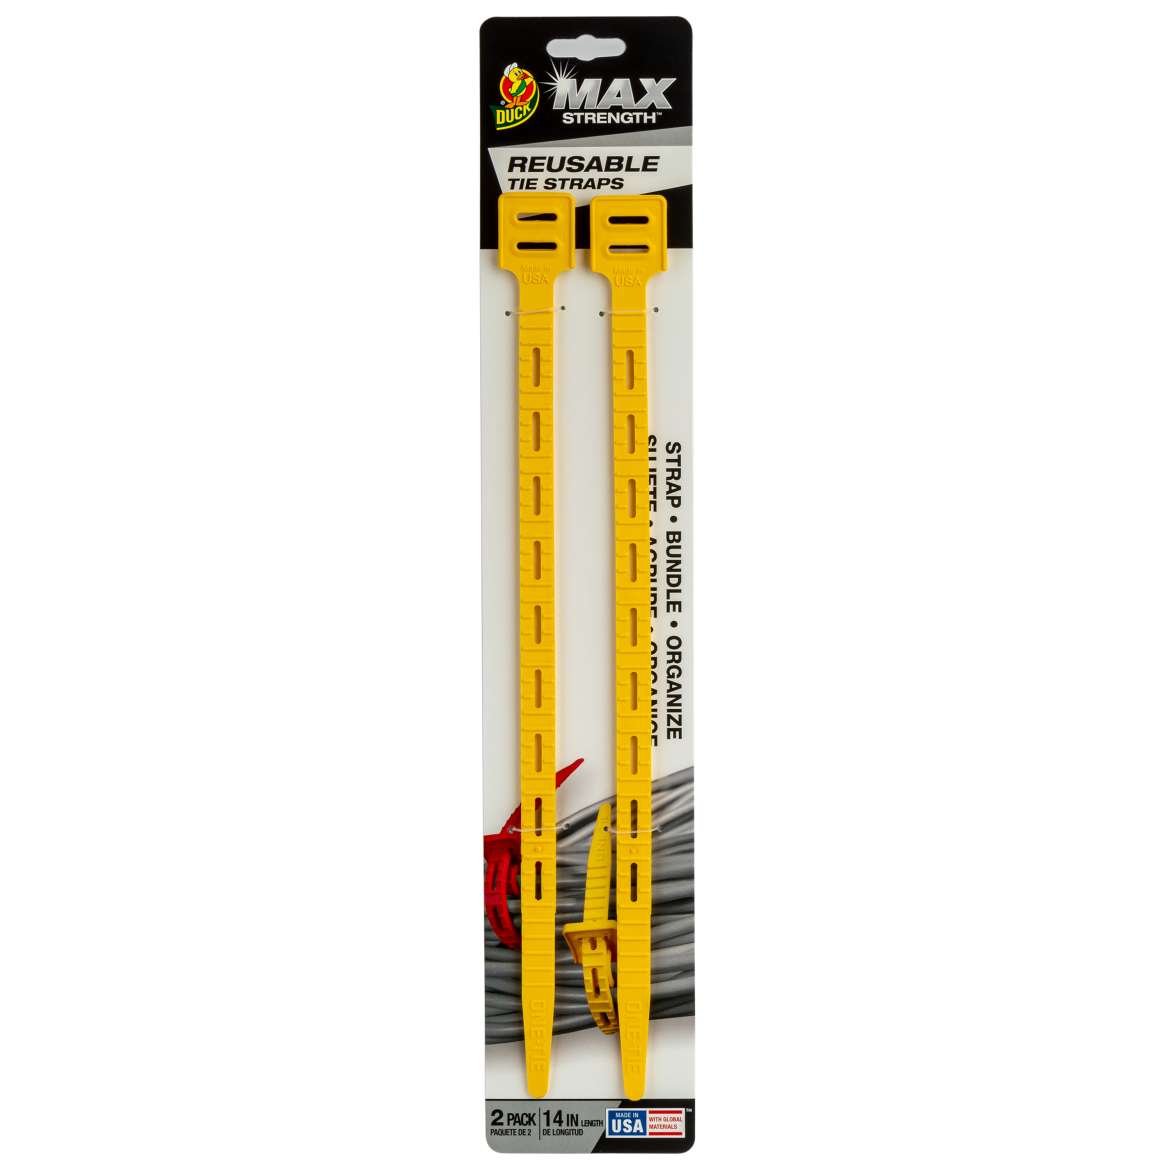 Duck® Max Strength Reusable Tie Straps - Yellow, 2 pk, 14 in.